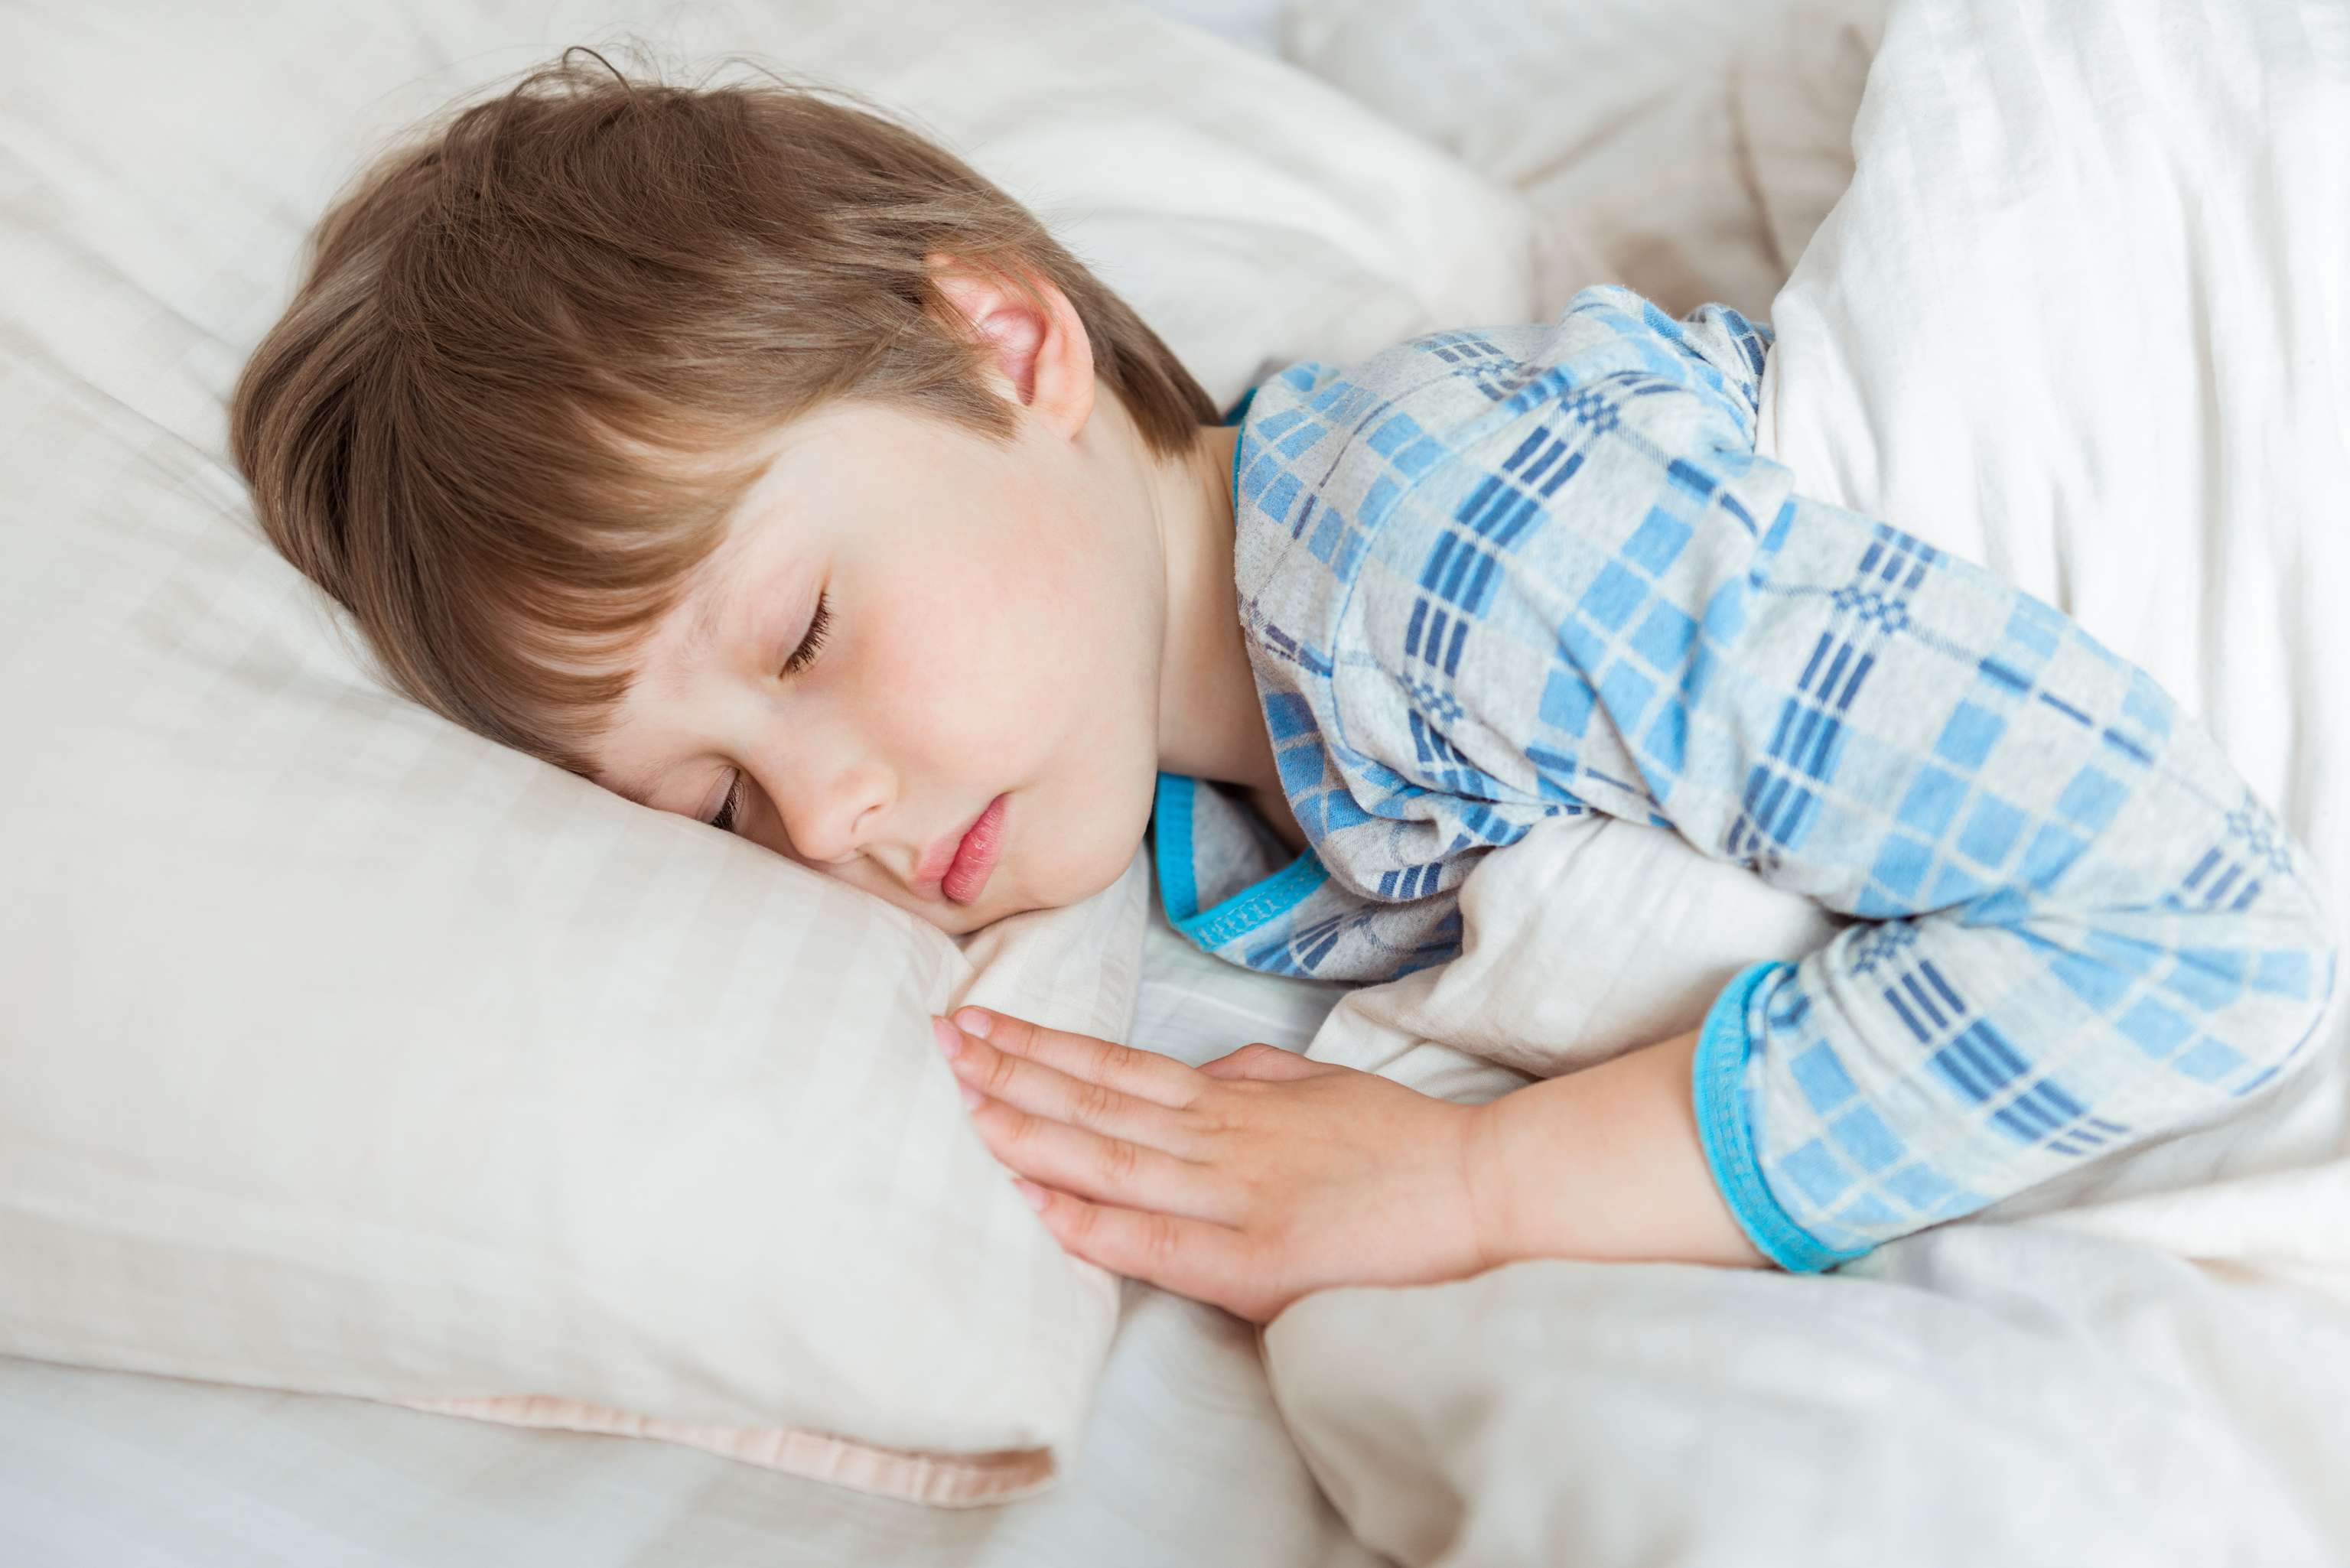 Does shorter sleep duration increase diabetes risk in children?